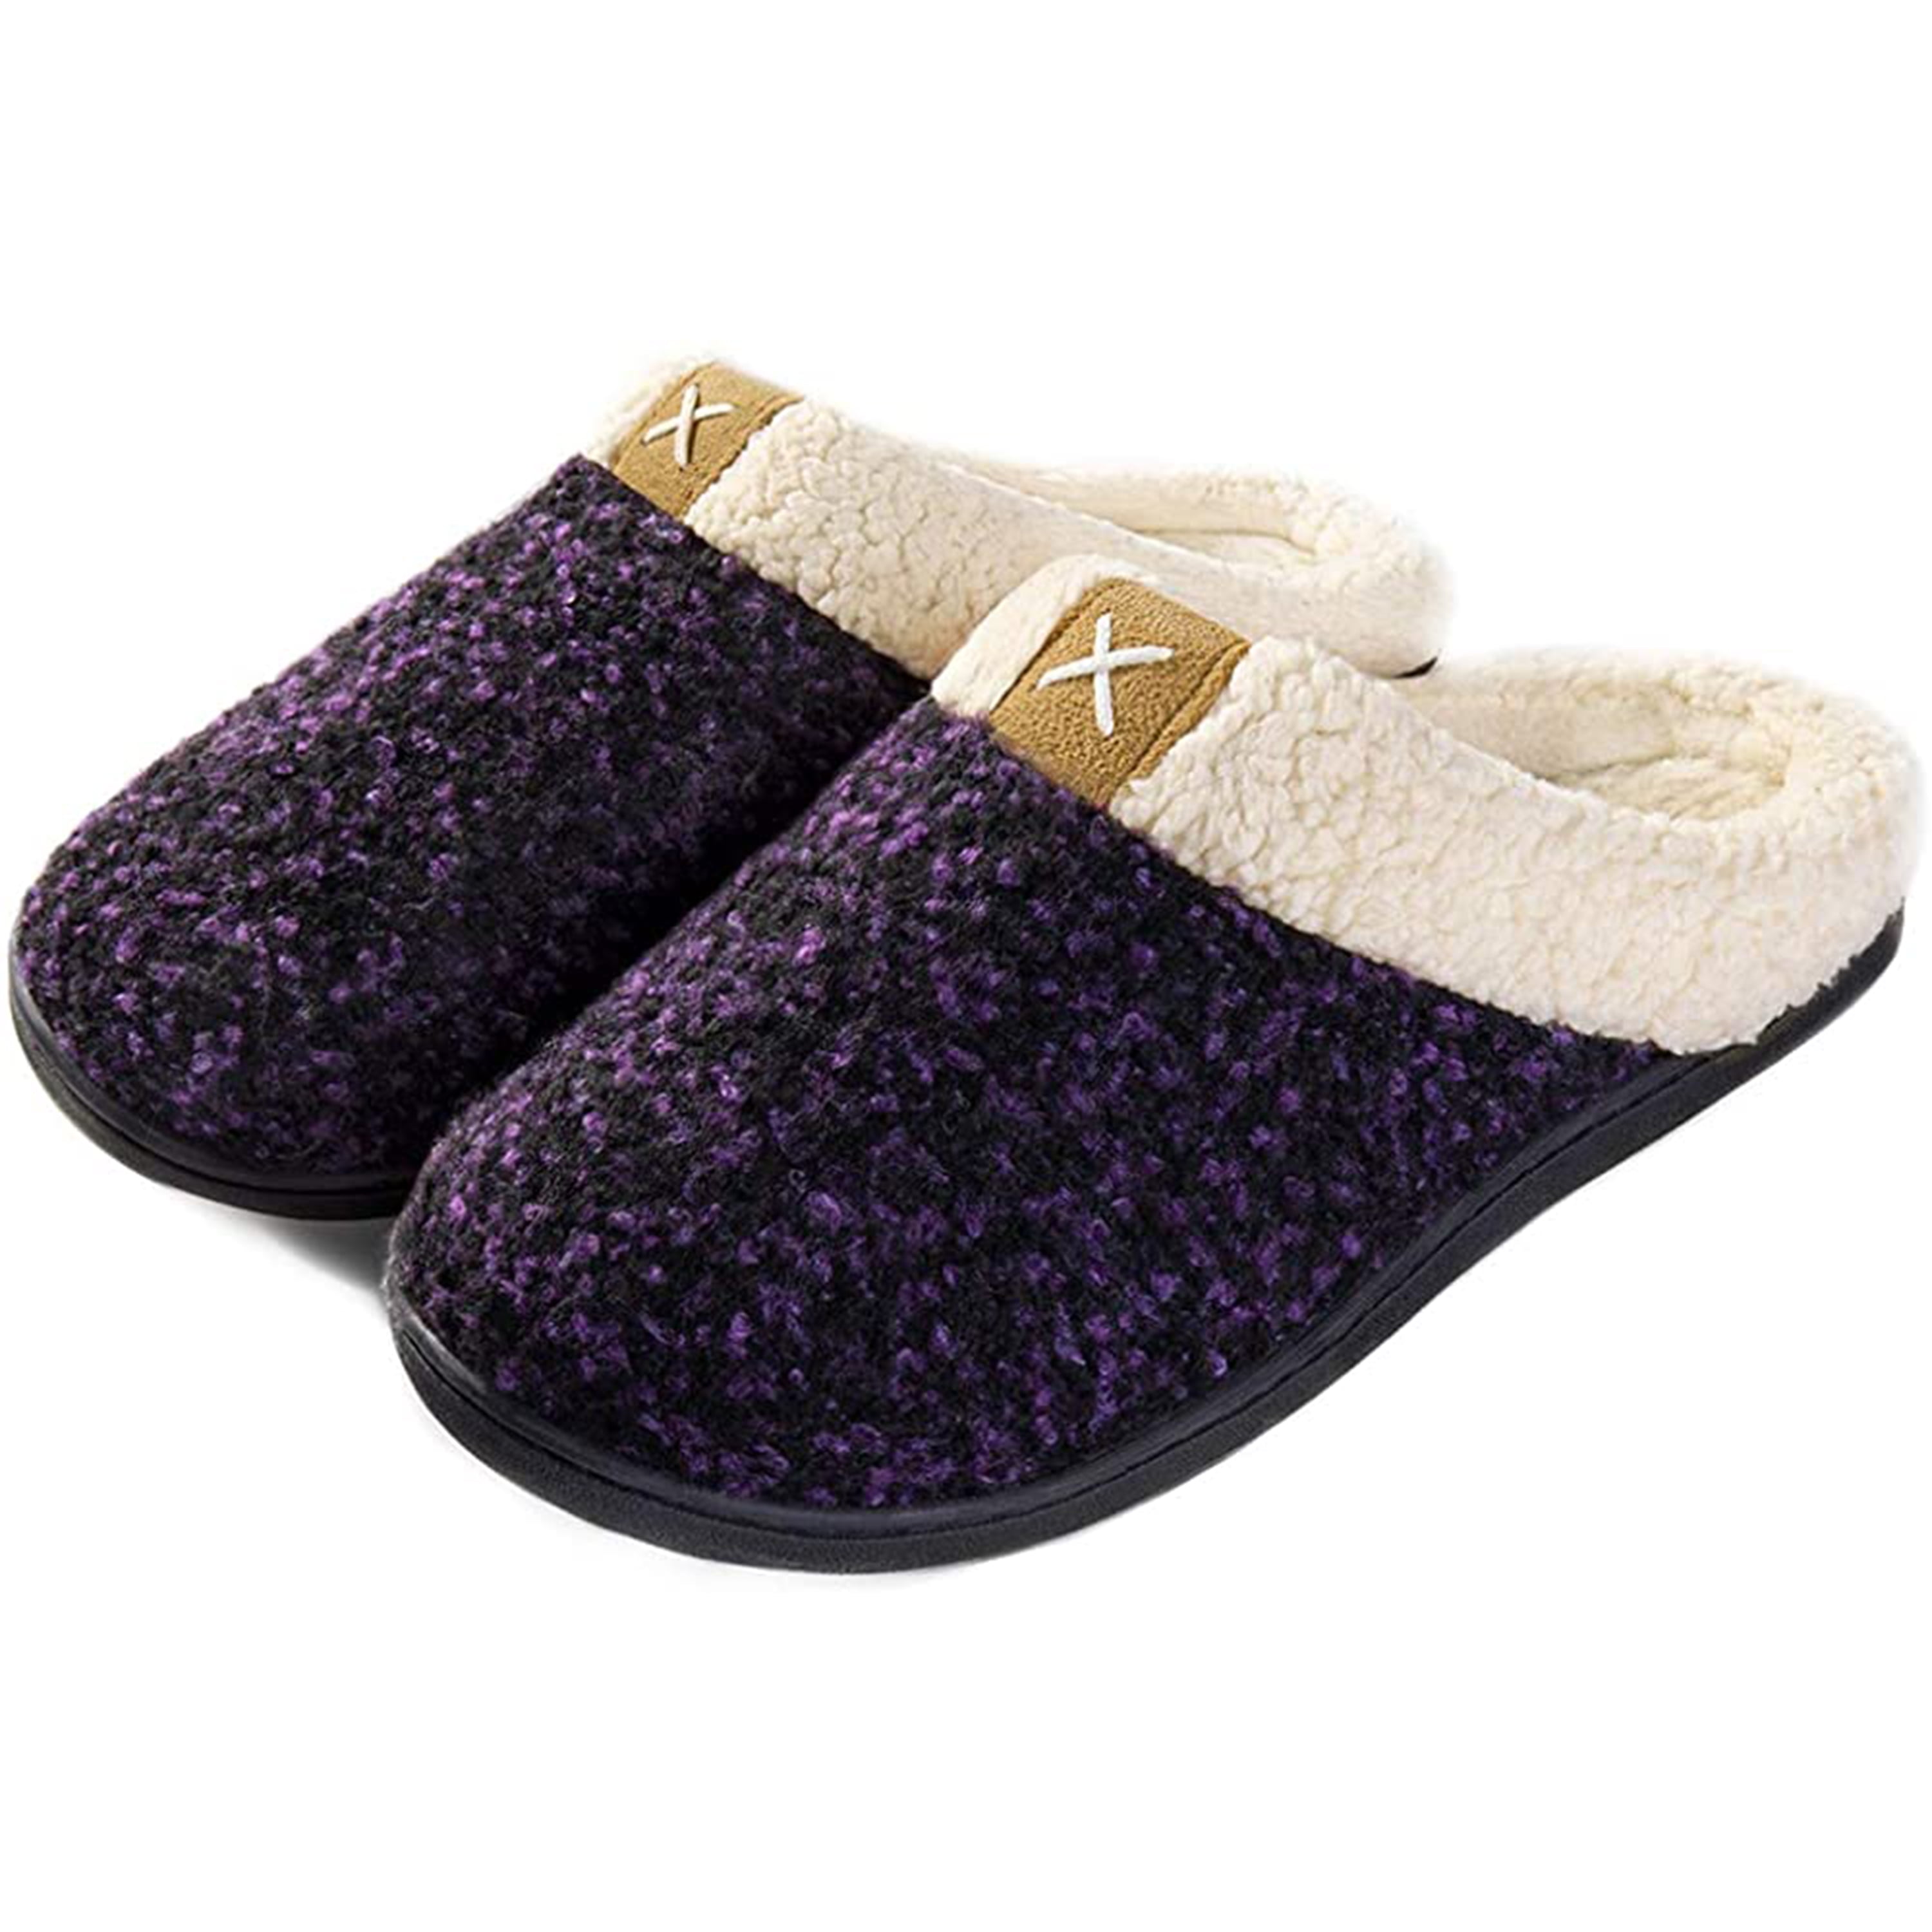 KuaiLu Mens Slippers Knitted Wool-Like Plush Fleece Lined Slipper Boots Winter Warm Cozy Non-Slip Rubber Sole House Slippers 